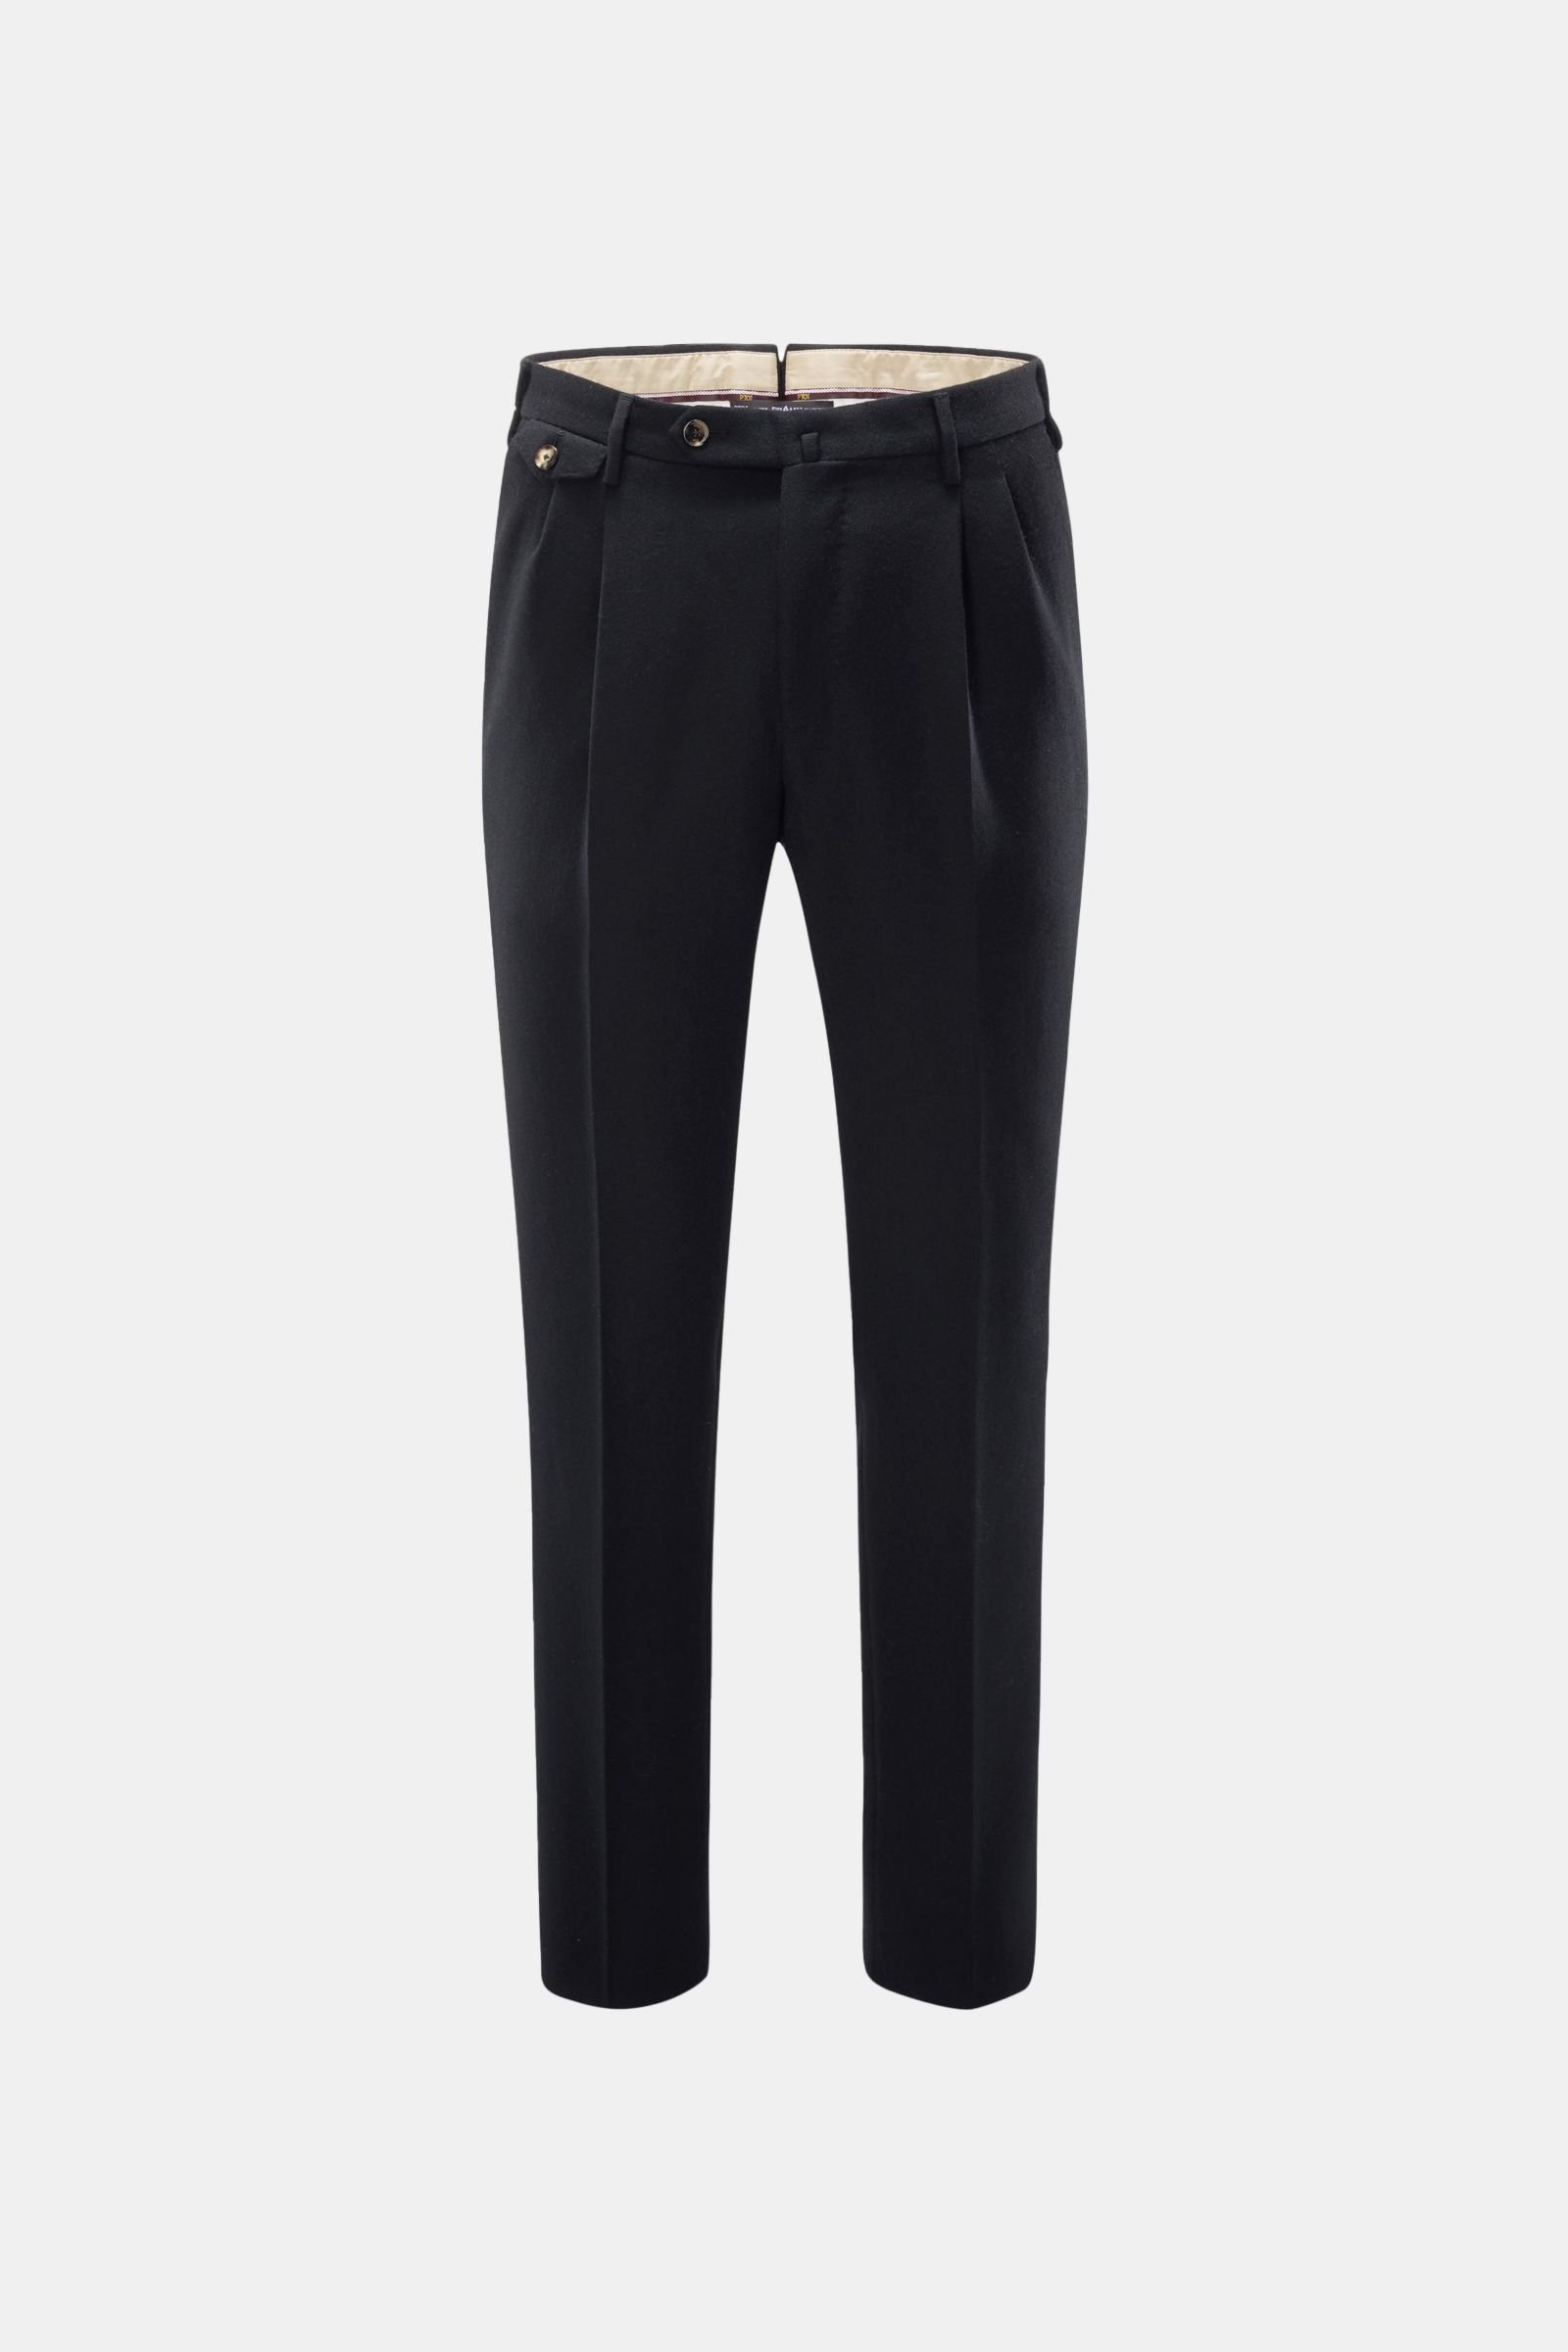 Wool trousers 'The Draper Gentleman Fit' black